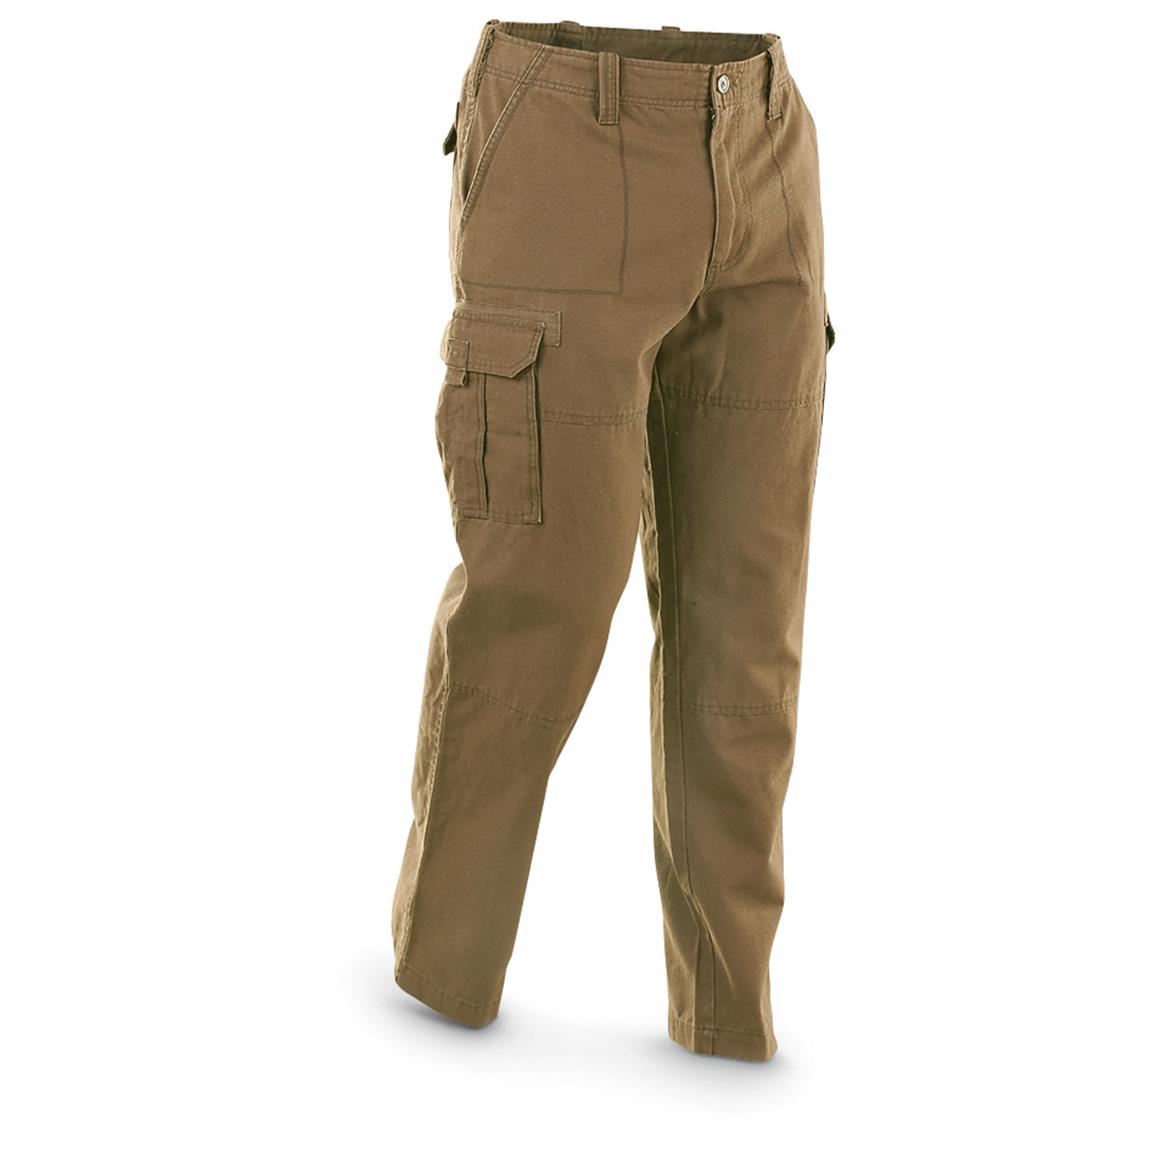 Add stylish mens cargo pants to your fashion collection - bonofashion.com